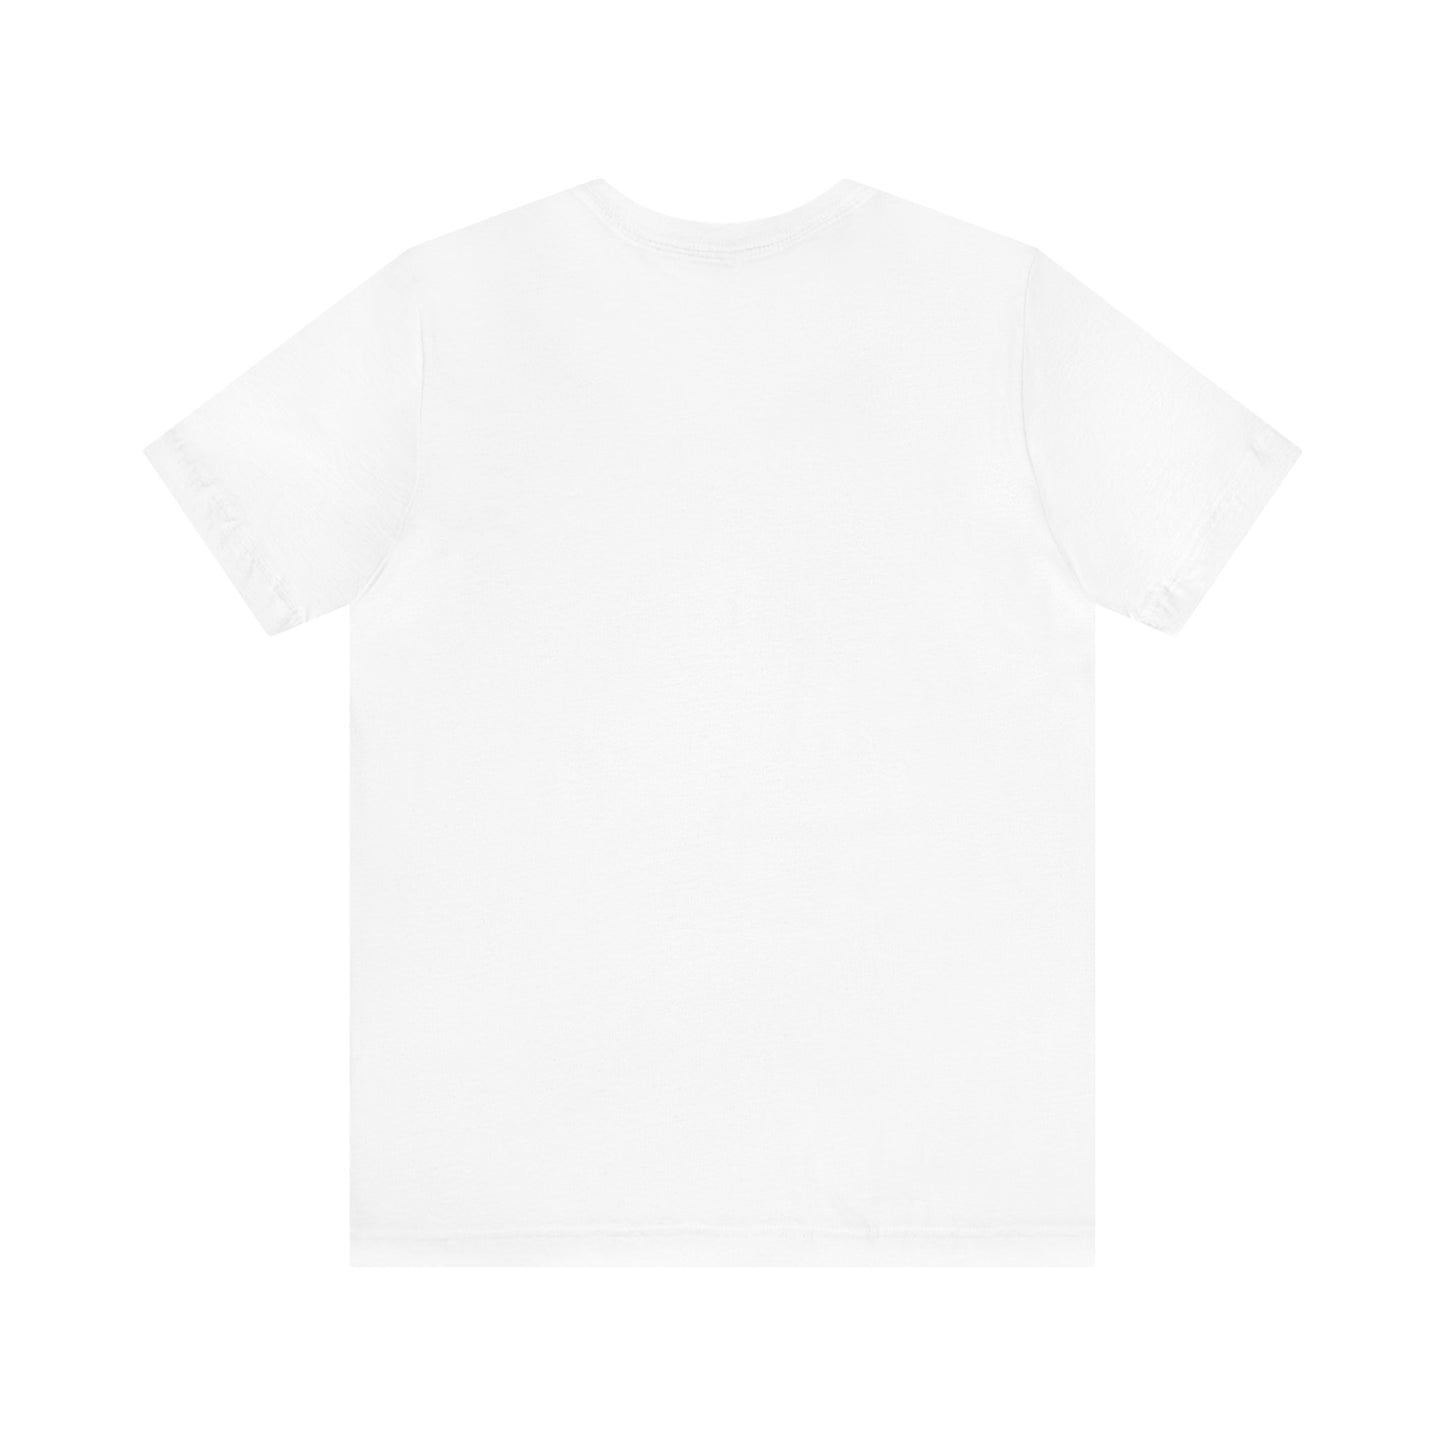 Alex Morris T-Shirt